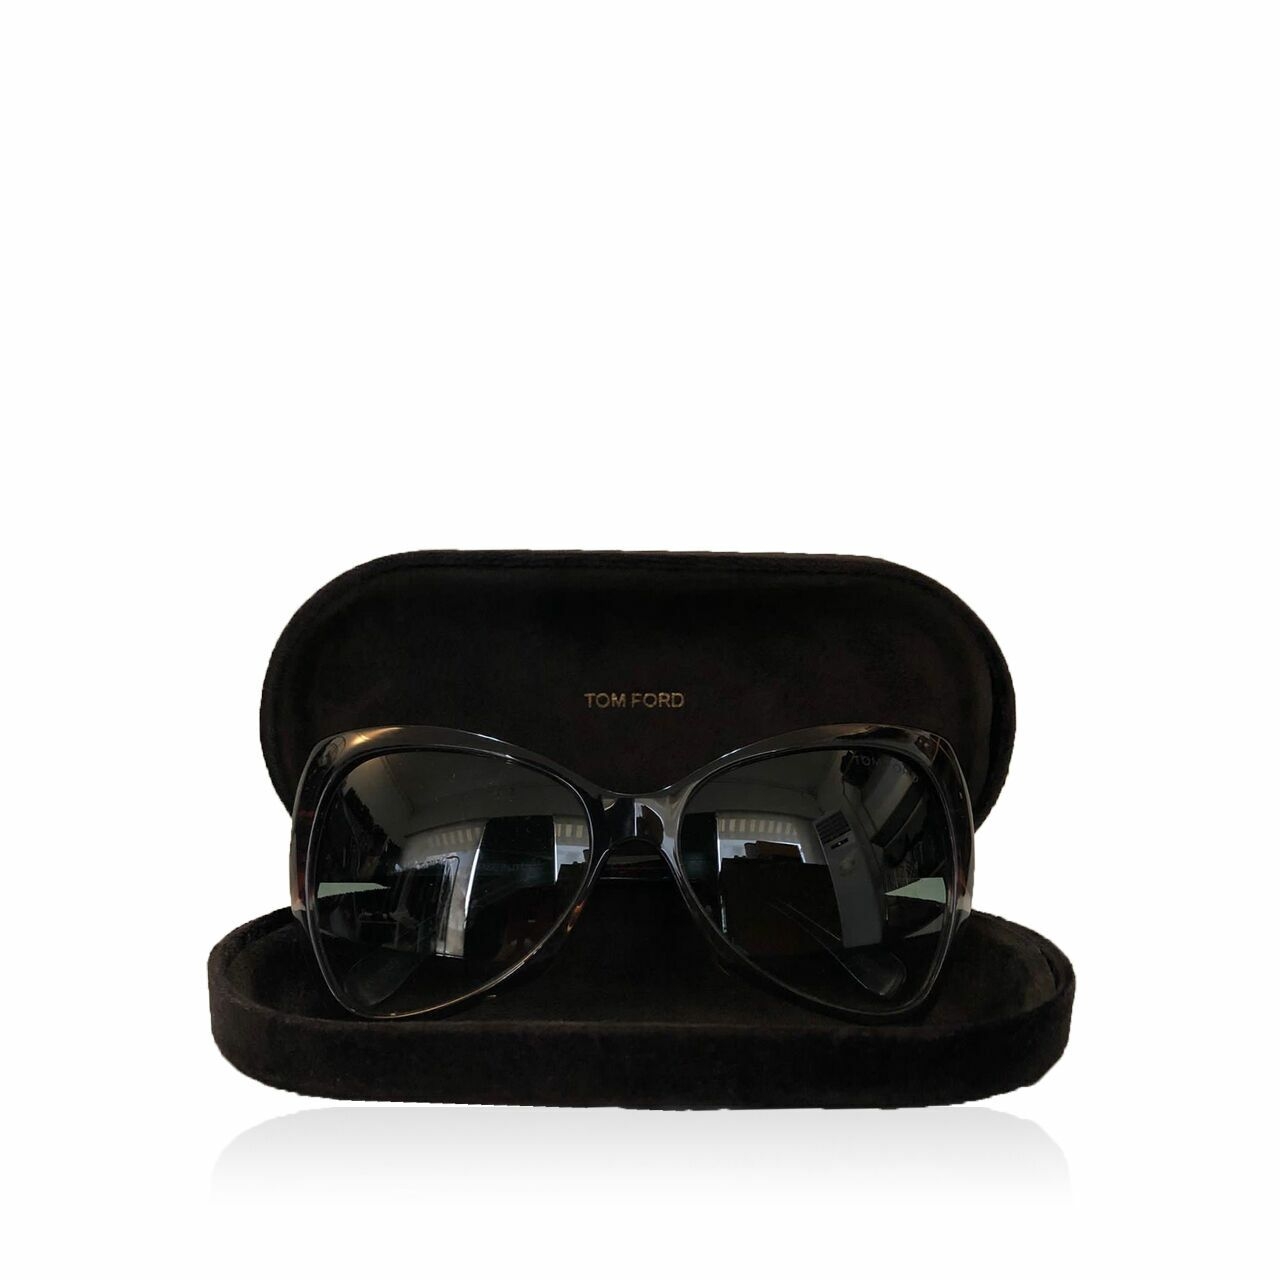 Tom Ford Infinity Dark Brown & Black Sunglasses